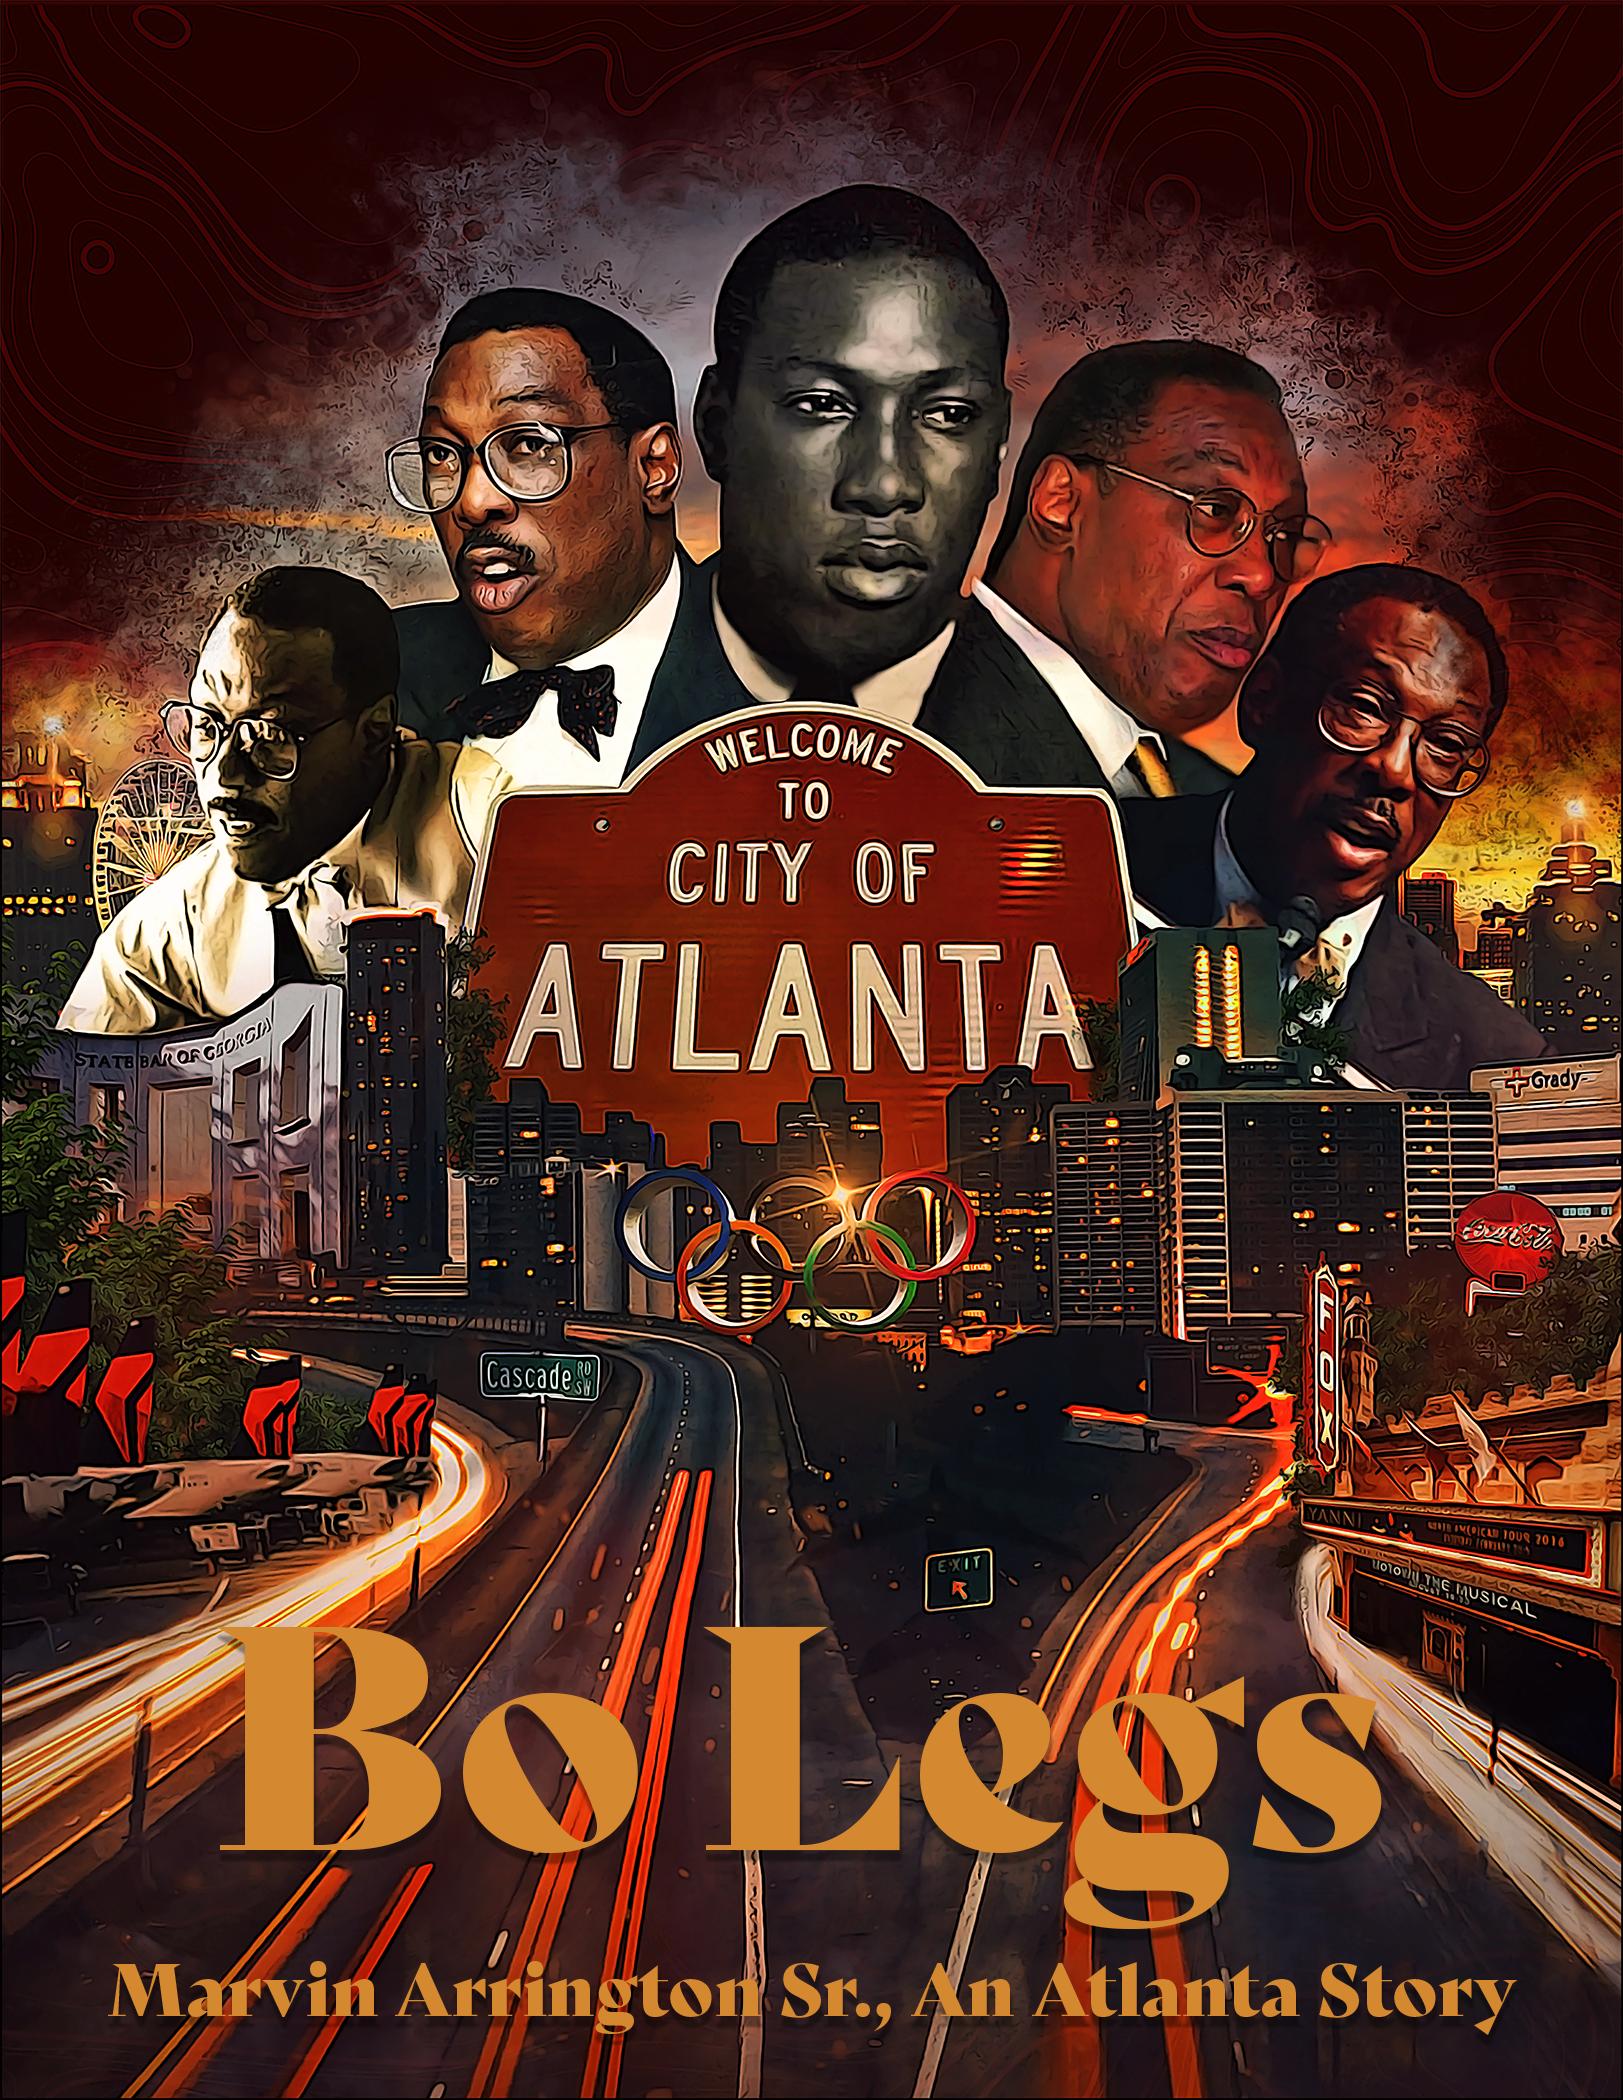     Bo Legs: Marvin Arrington, Sr., an Atlanta Story